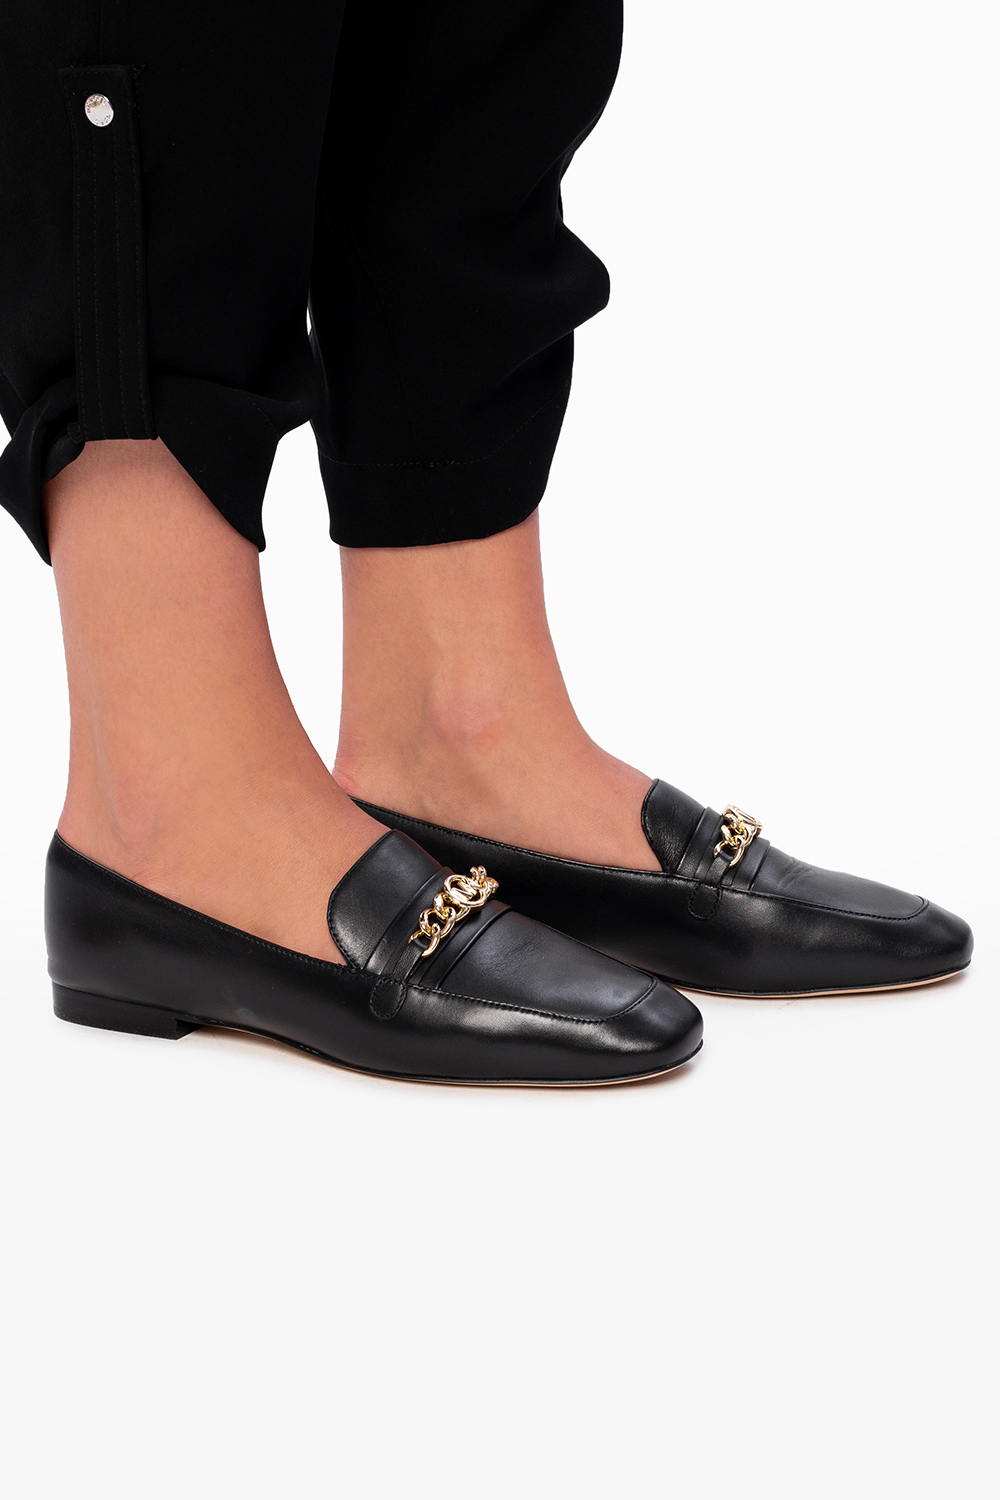 michael kors loafer shoes